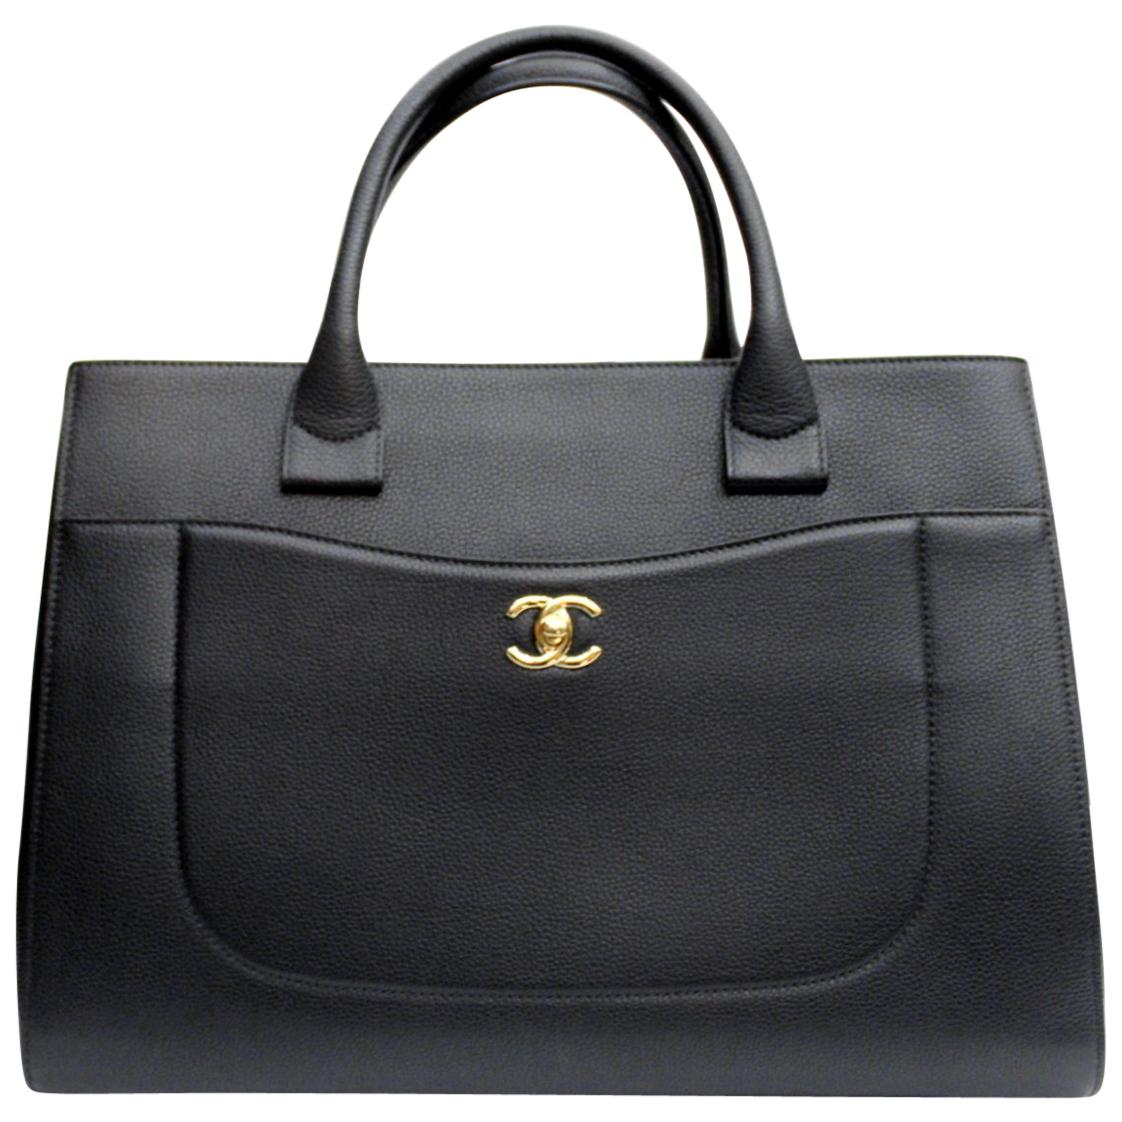 2017 Chanel Black Leather Neo Executive Bag